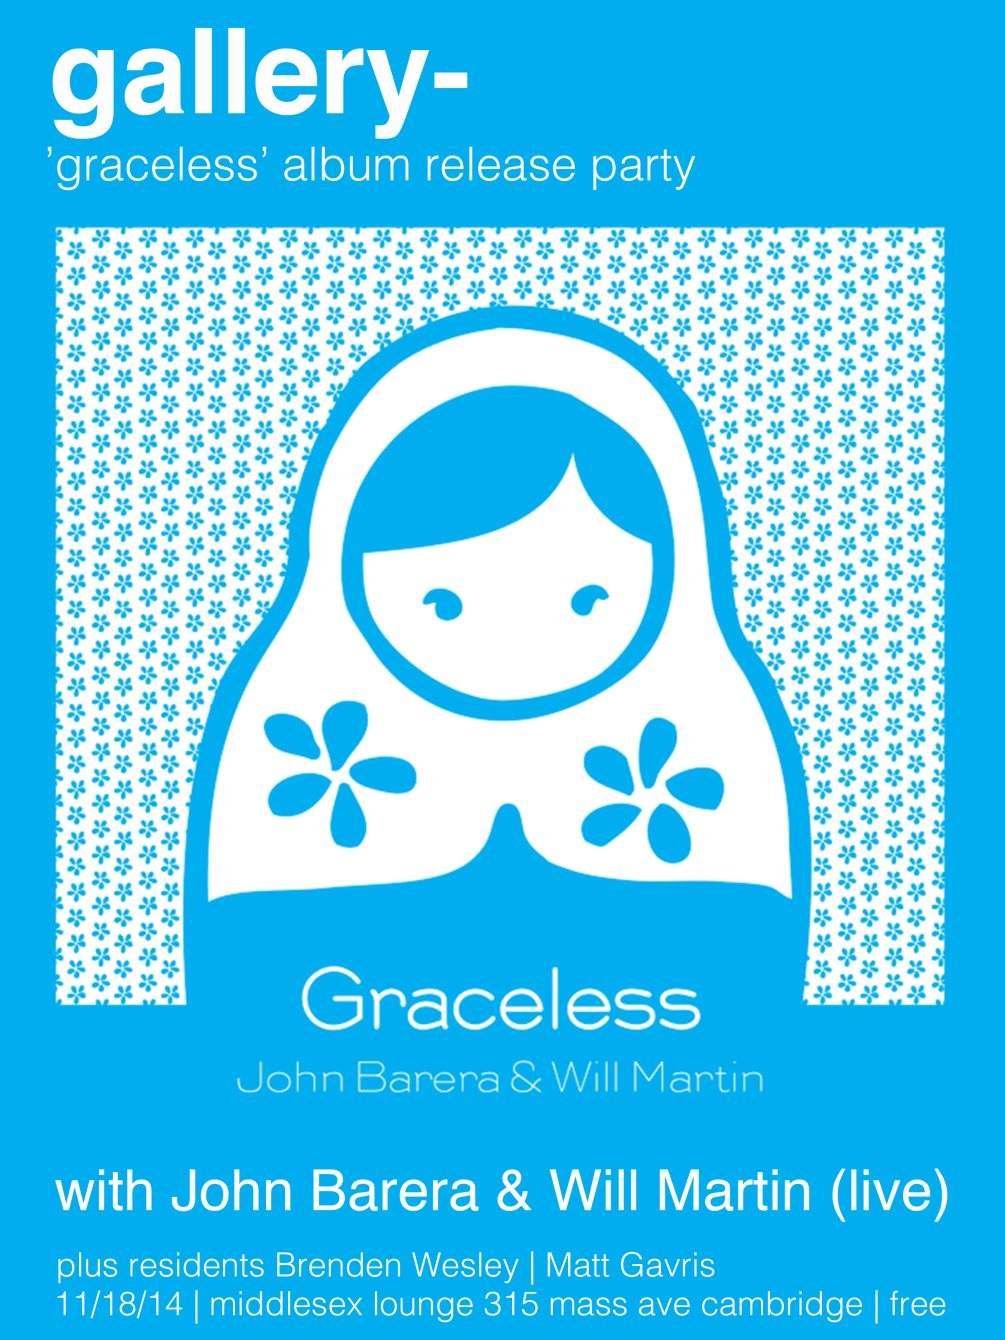 Gallery w John Barera & Will Martin (Live) 'Graceless' Album Release Party - フライヤー表